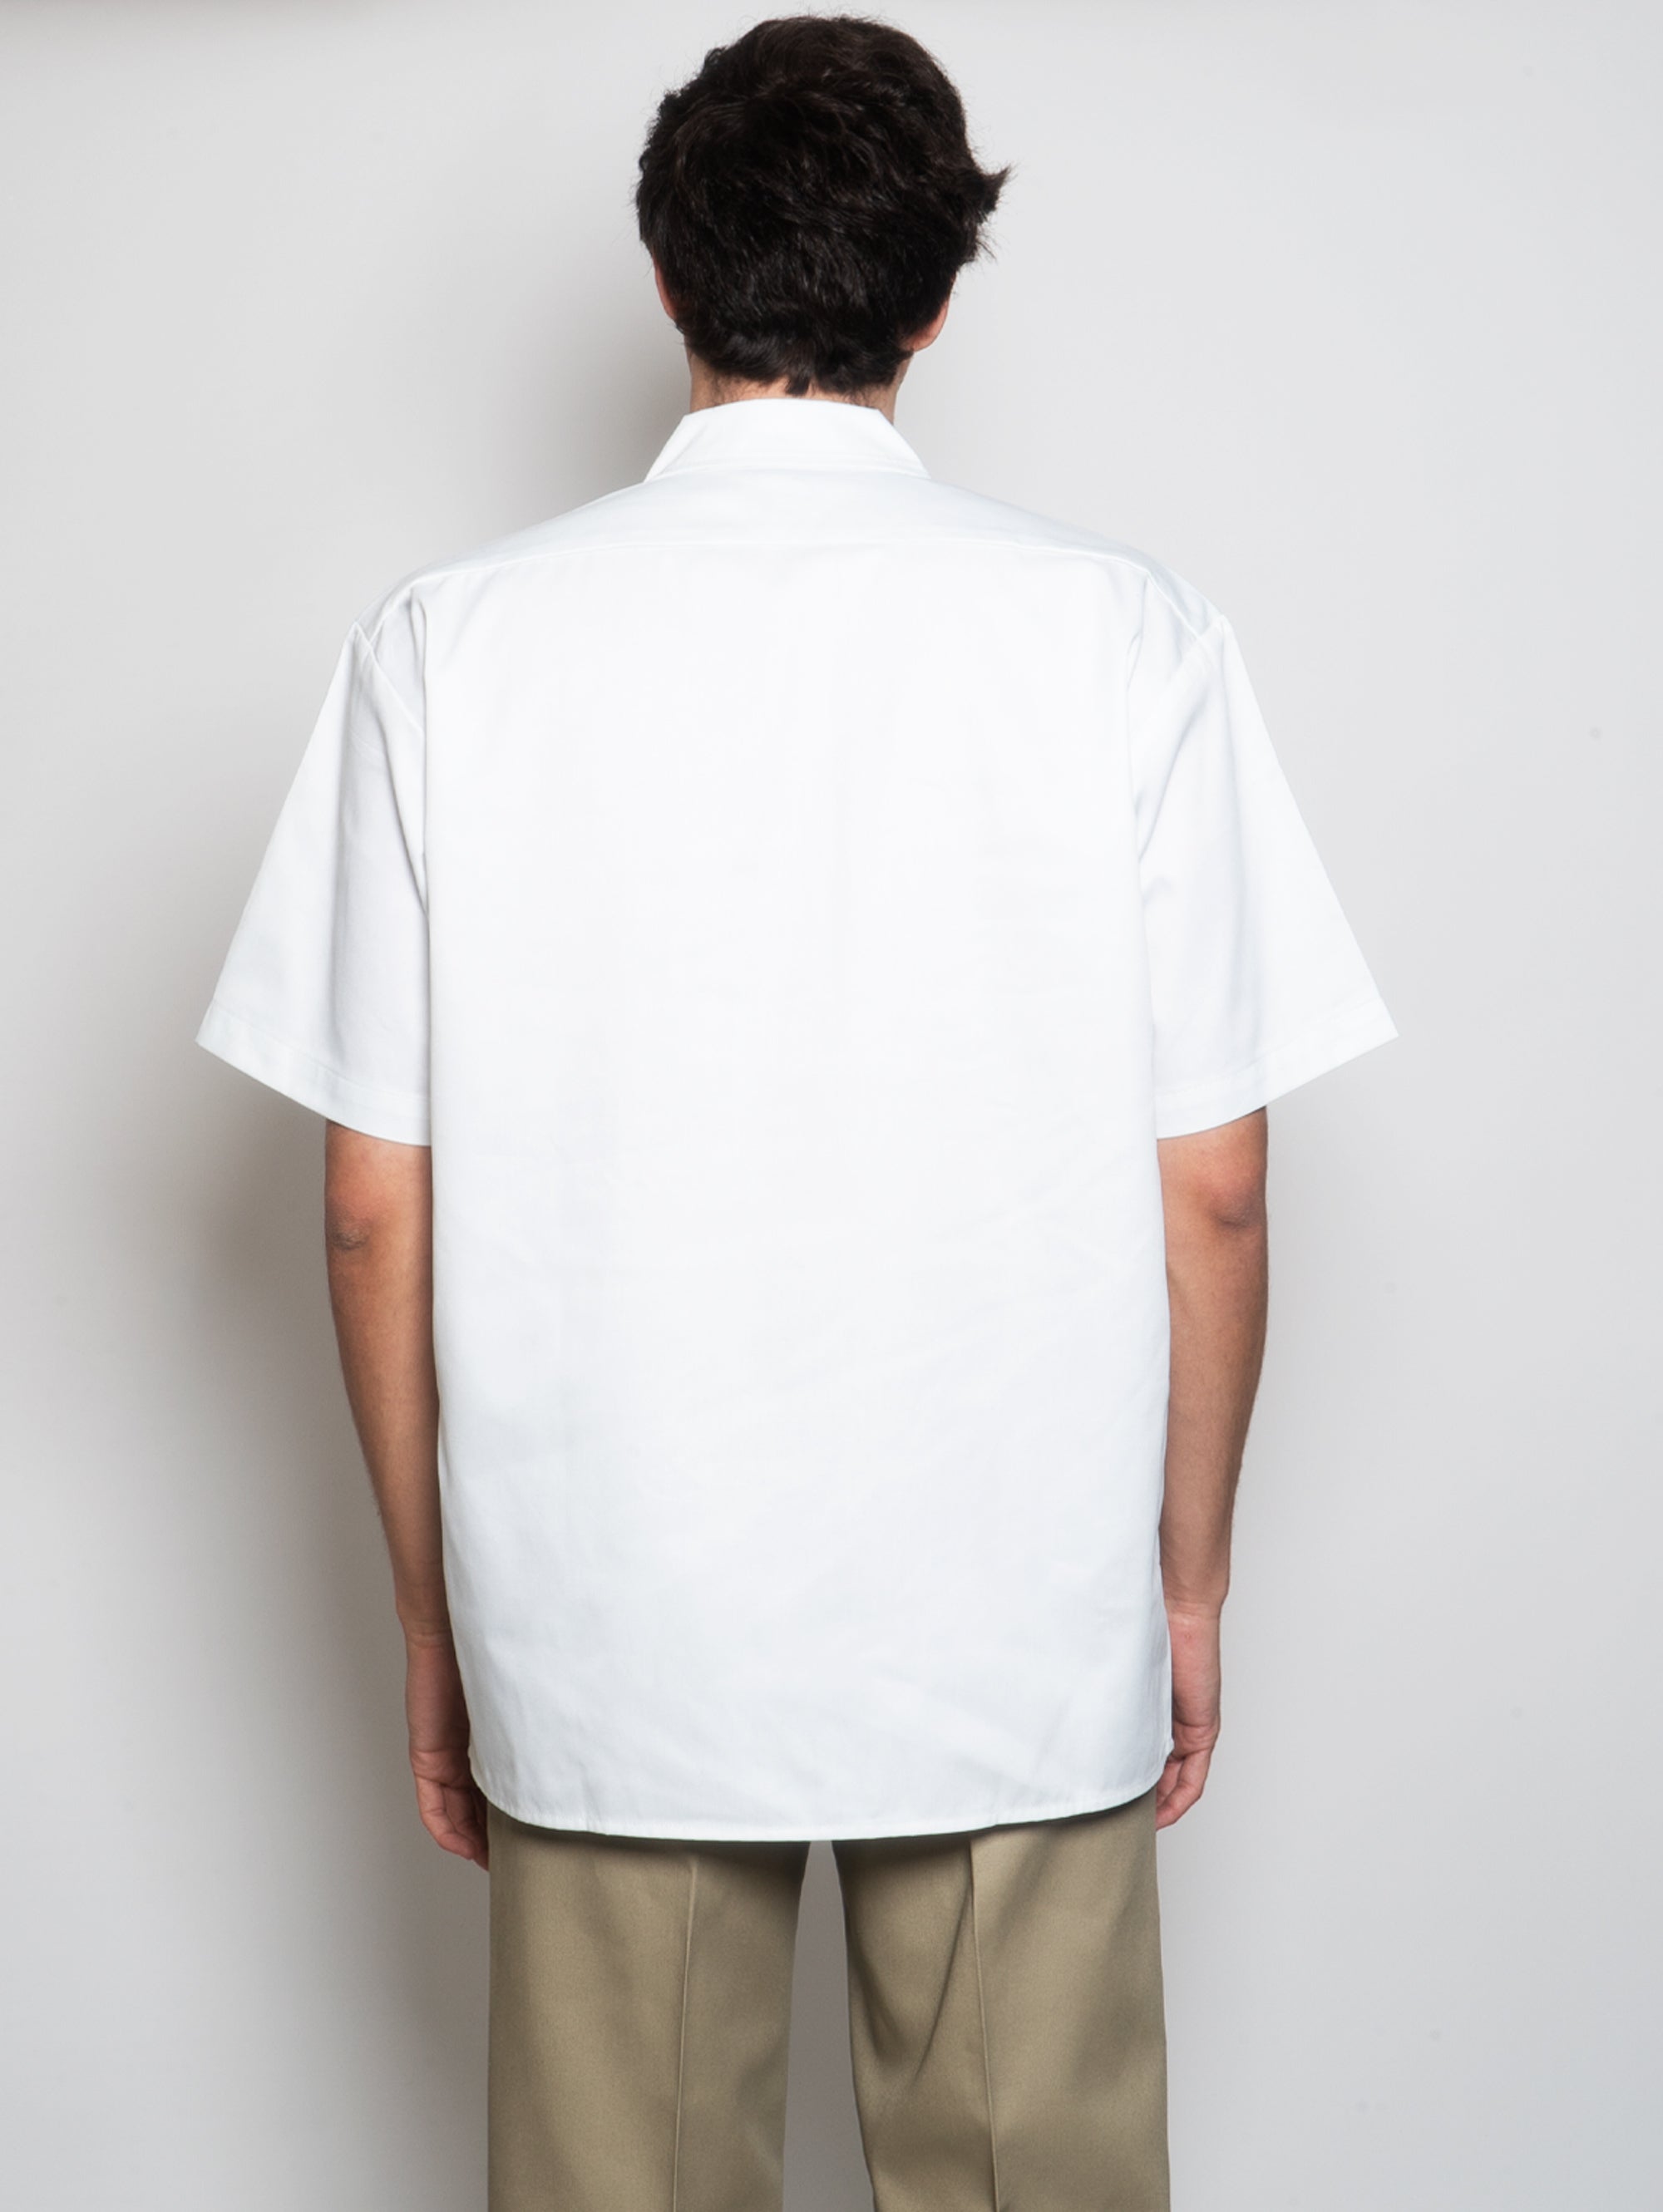 Weißes kurzärmliges Arbeiterhemd